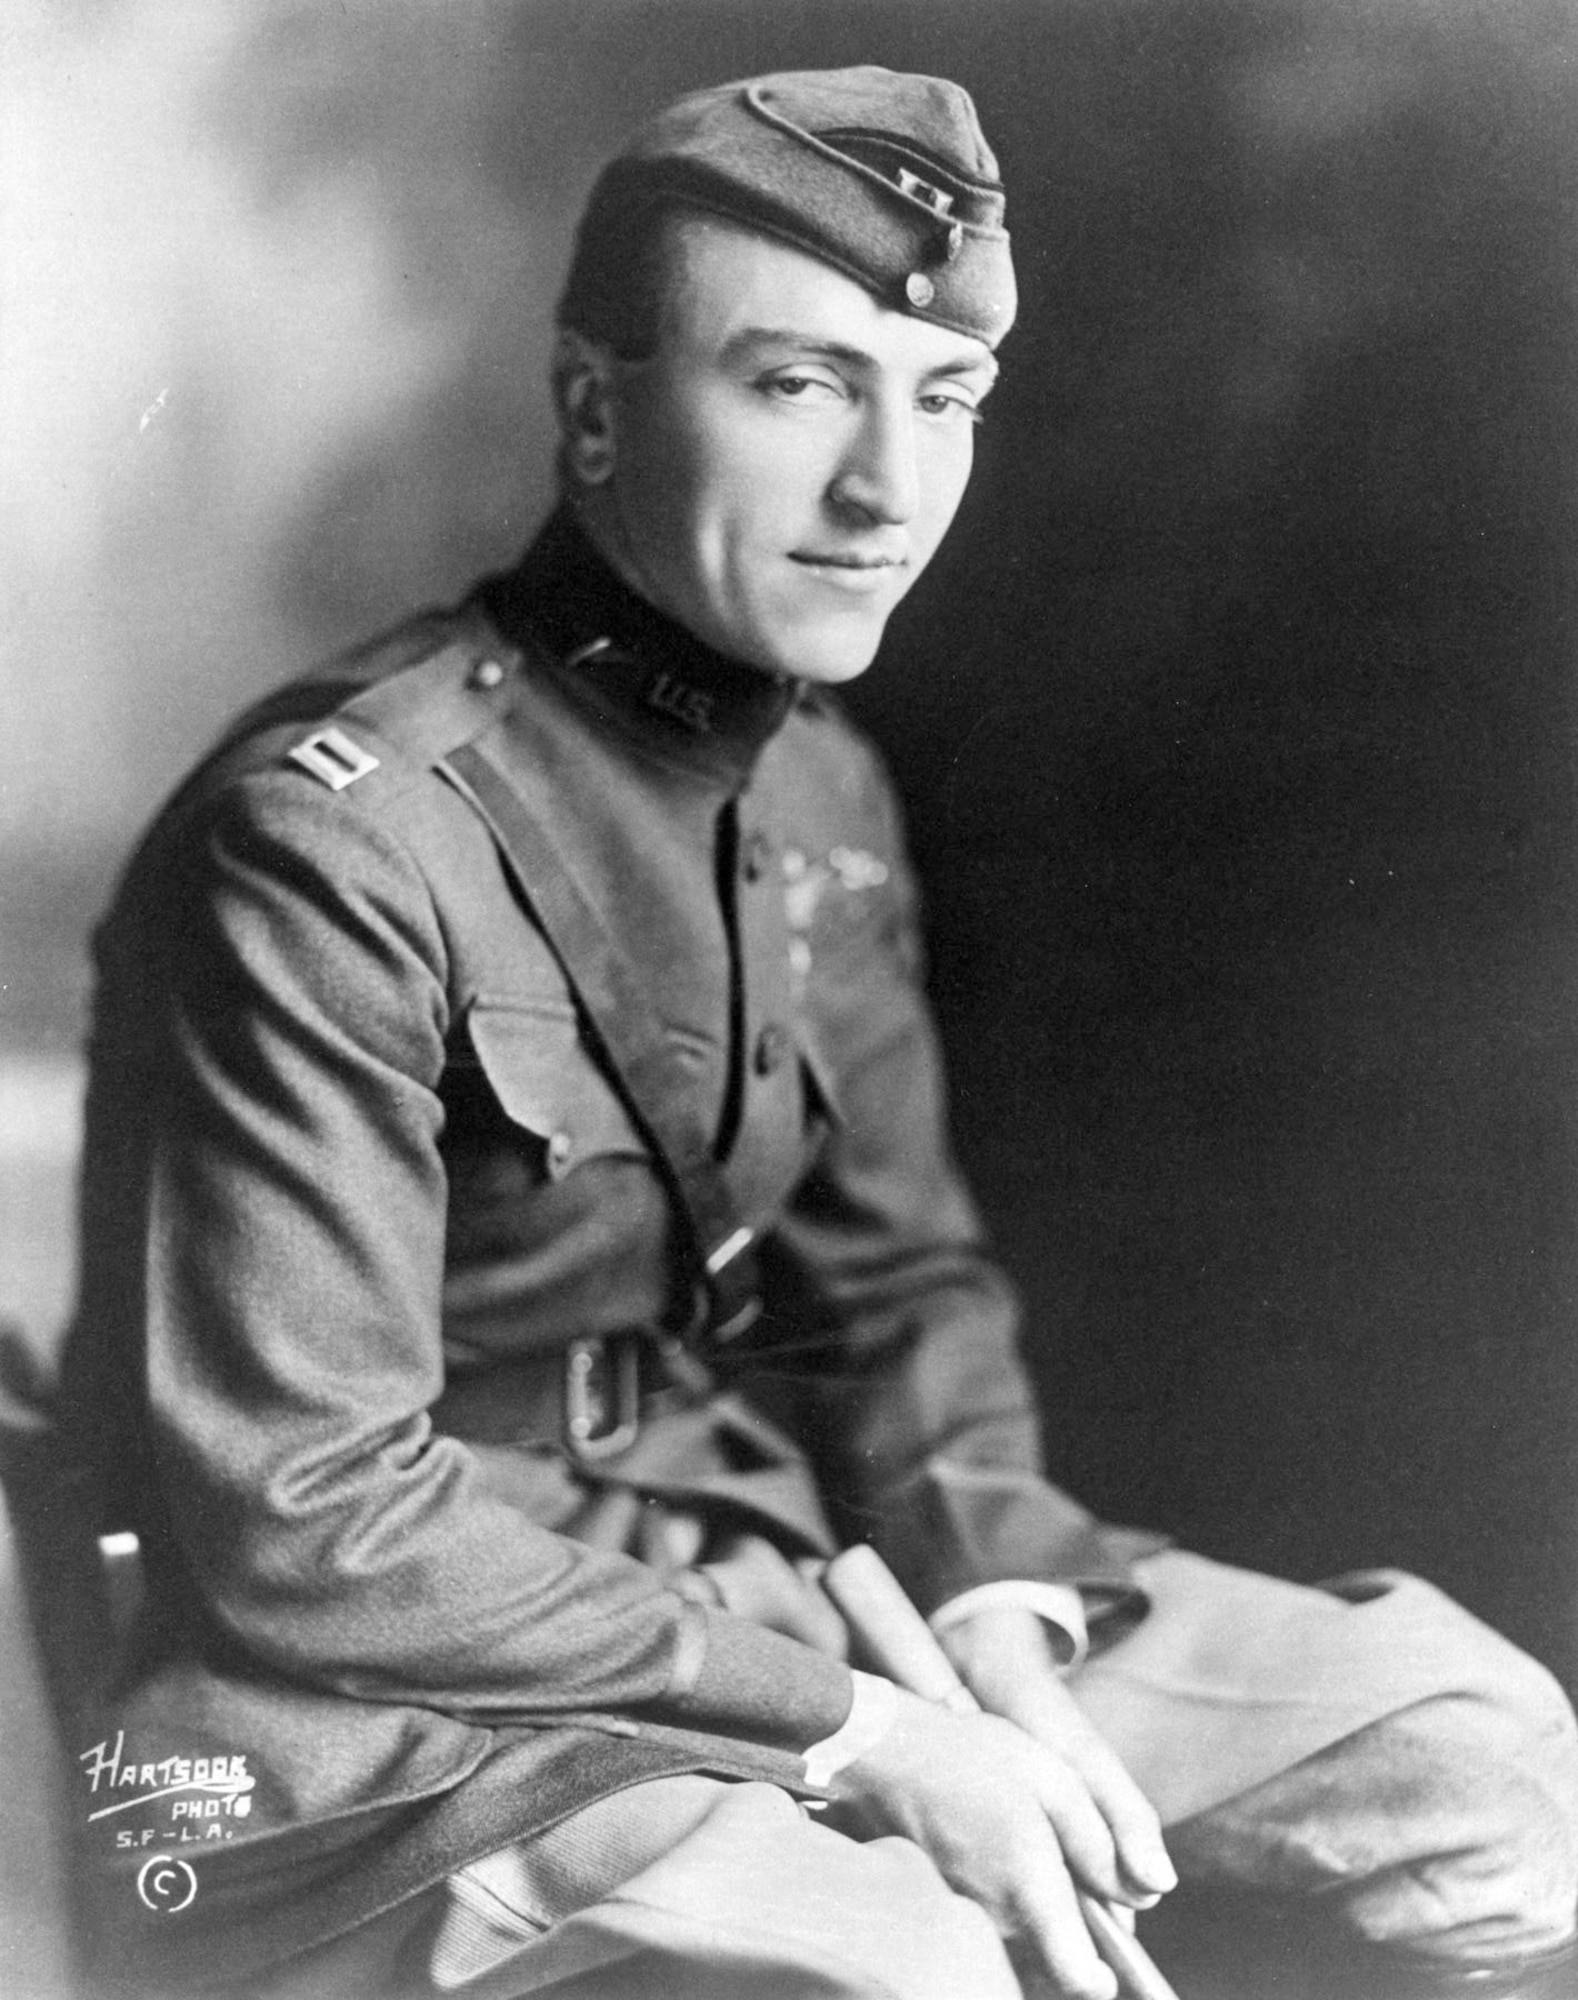 Capt. Eddie Rickenbacker. (U.S. Air Force photo)